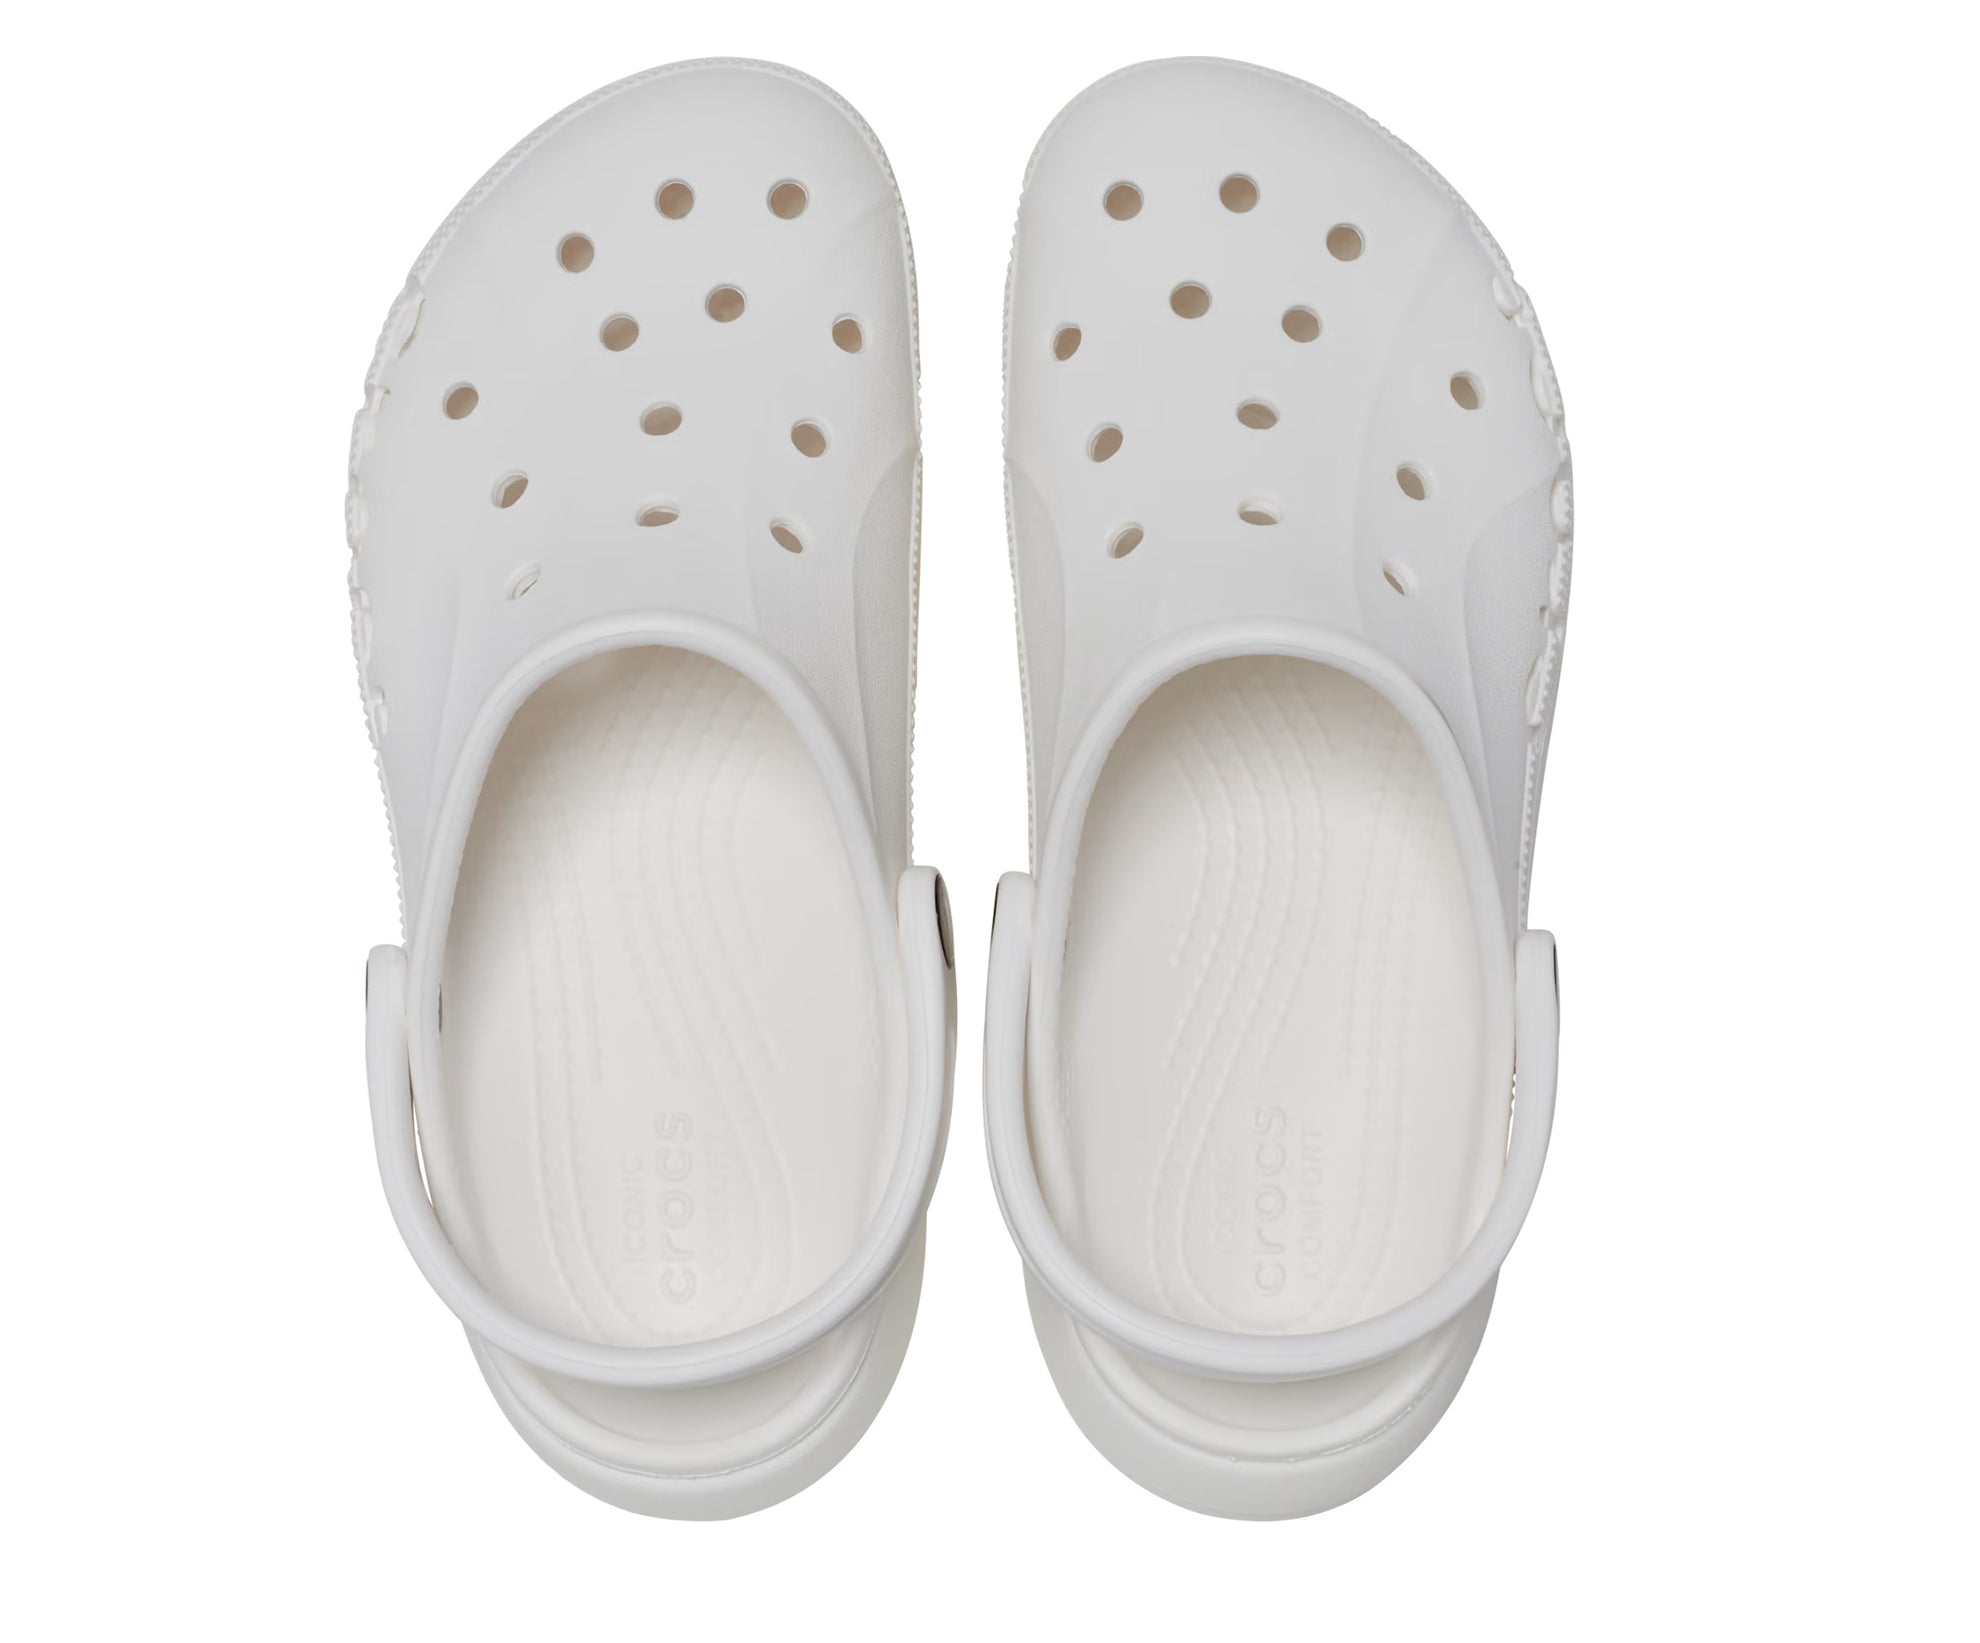 Authentic Crocs Baya Platform Clog - White